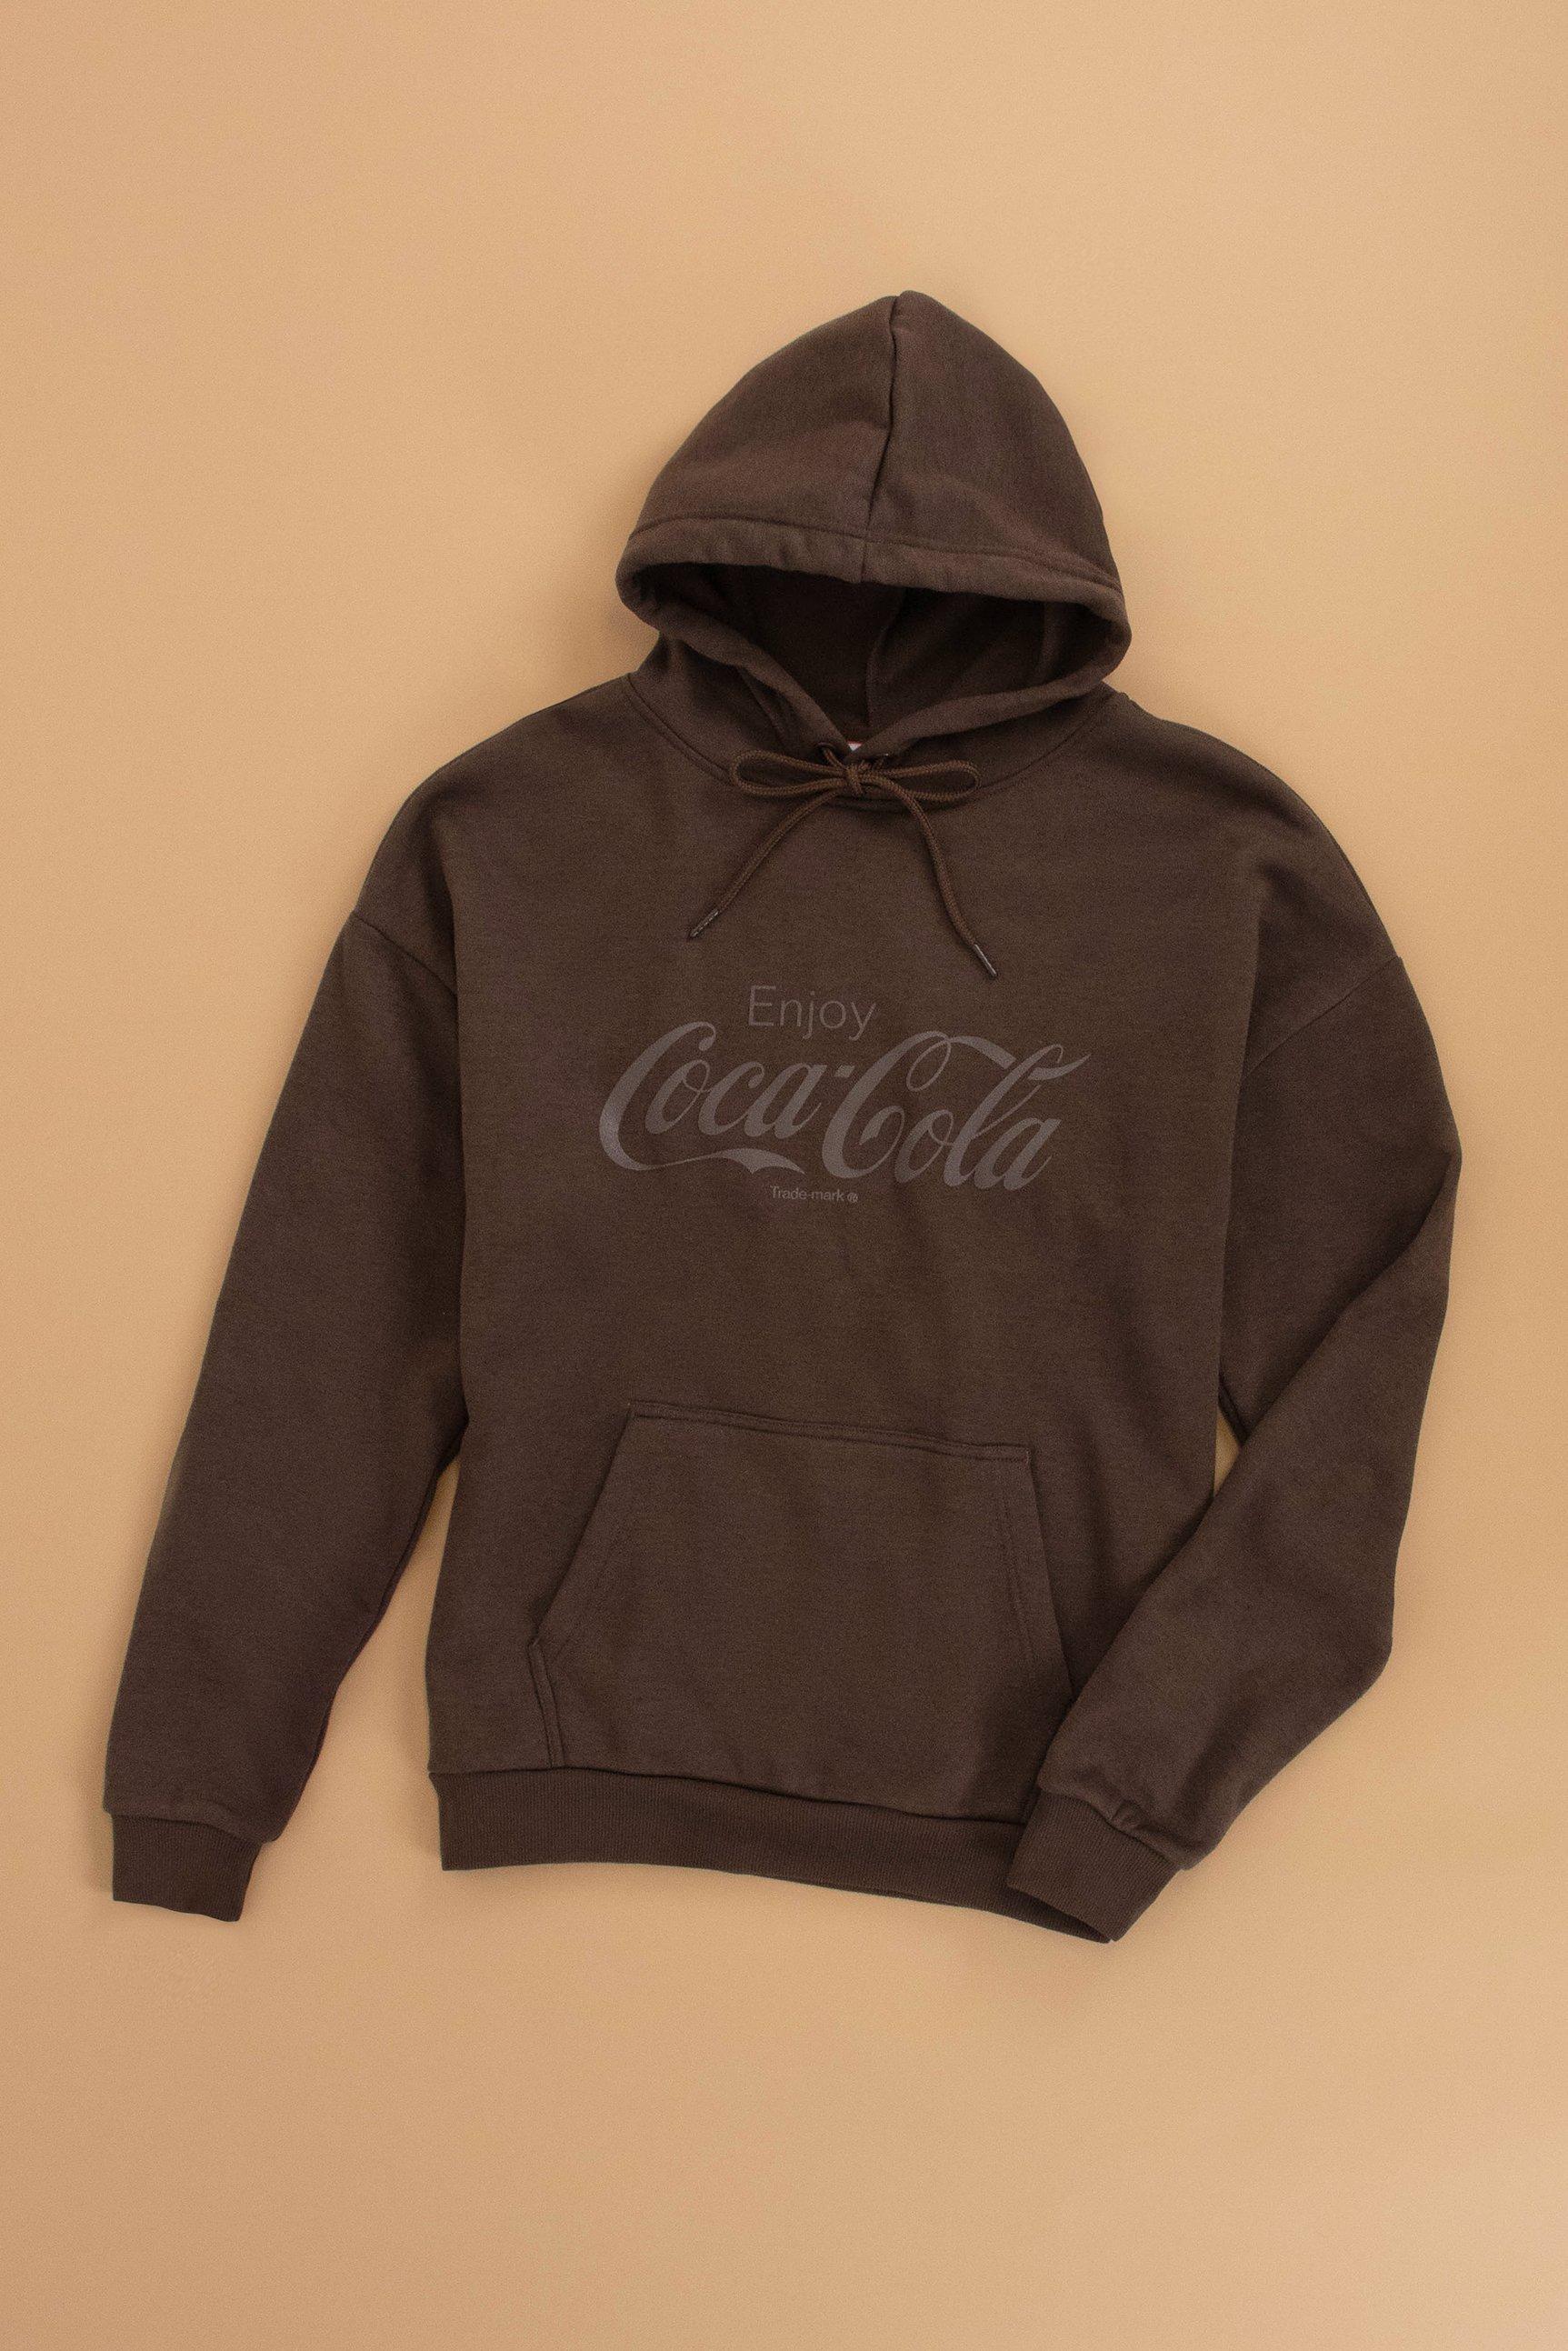 Mr Price | Coca-Cola Active Hoodie